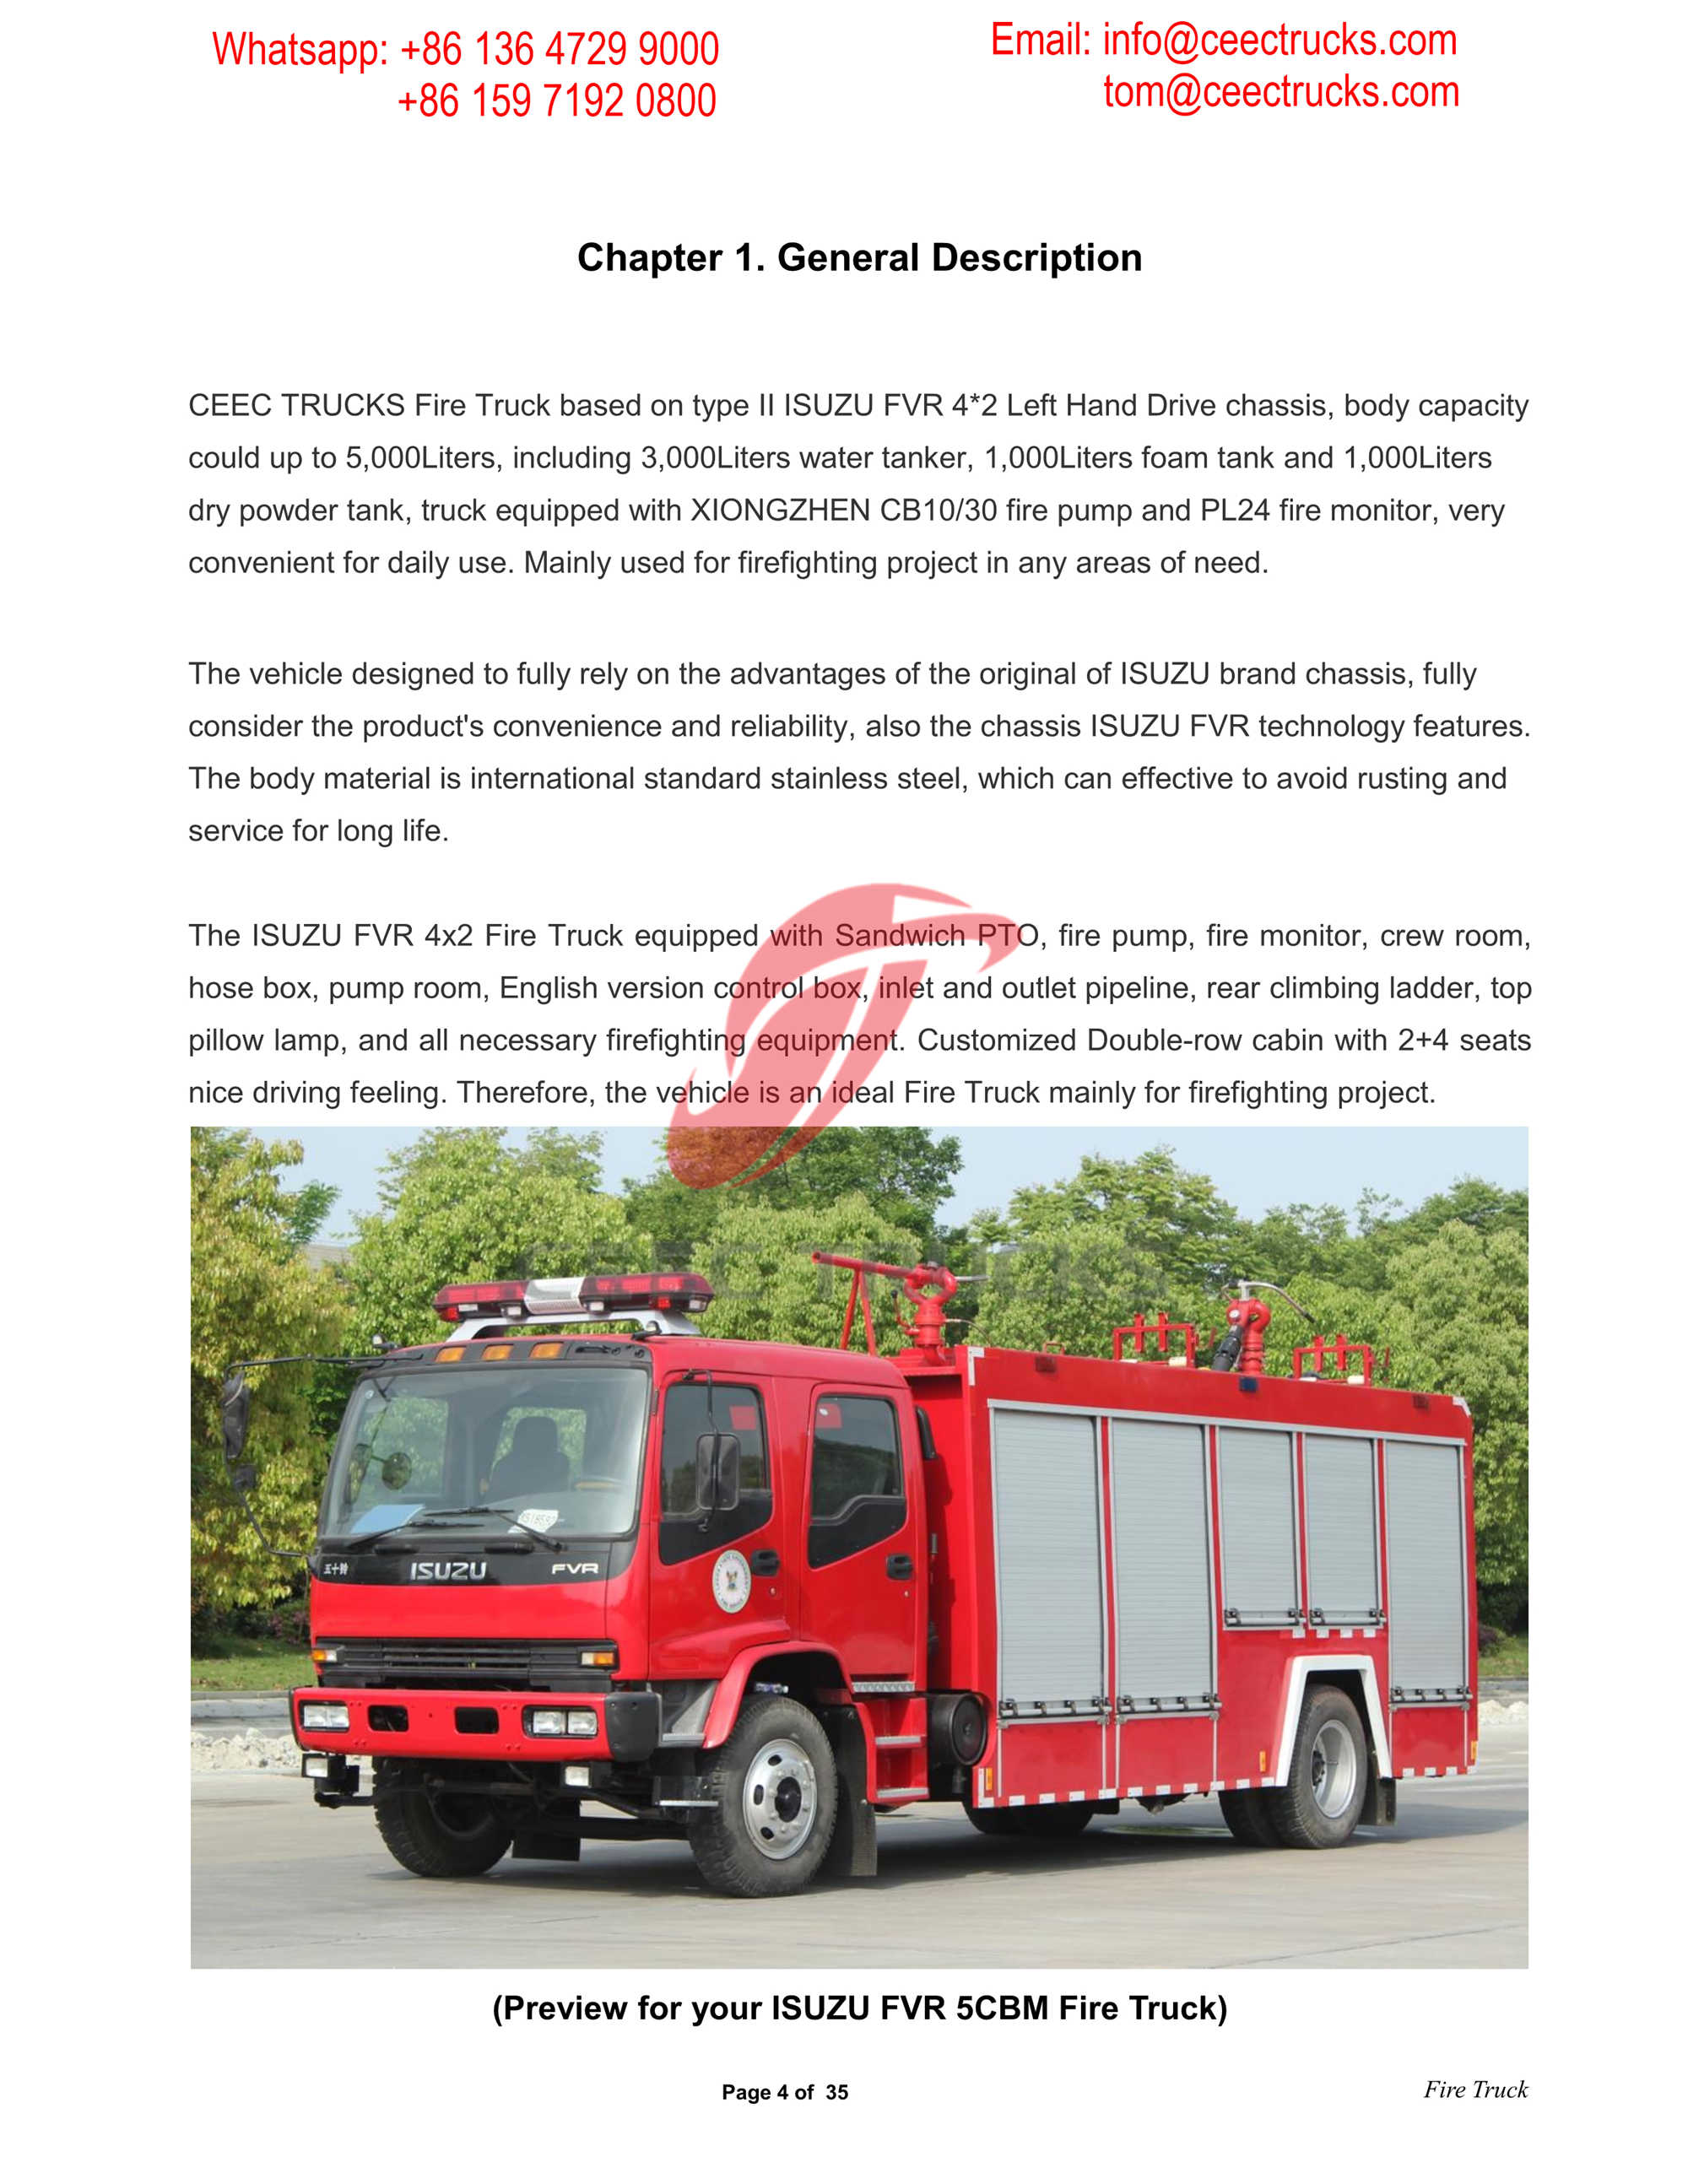 CEEC TRUCKS ISUZU FVR Water & Foam & Powder Fire Truck Manual--Ethiopia